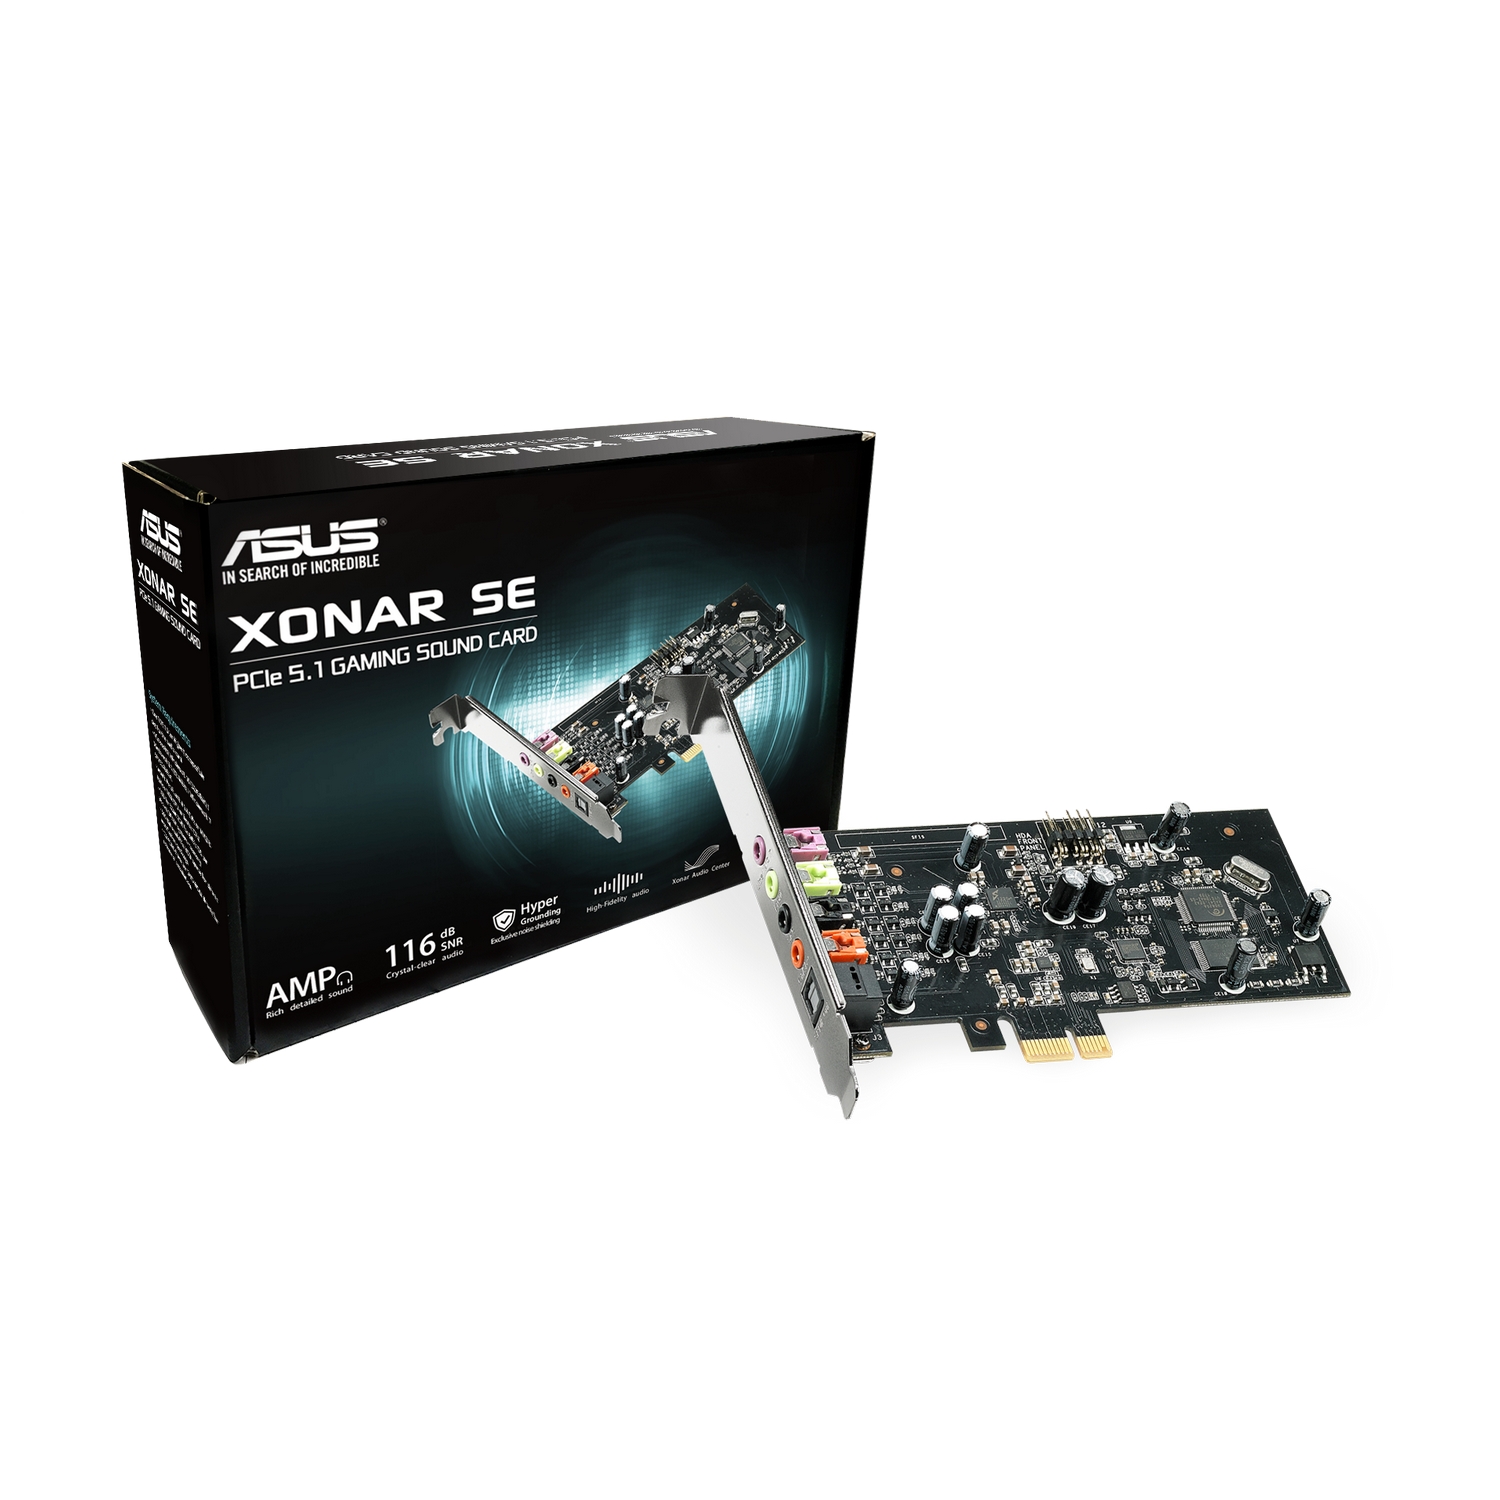 B Grade ASUS Xonar SE 5.1 PCI-E gaming sound card with 192kHz/24-bit Hi-Res Audio